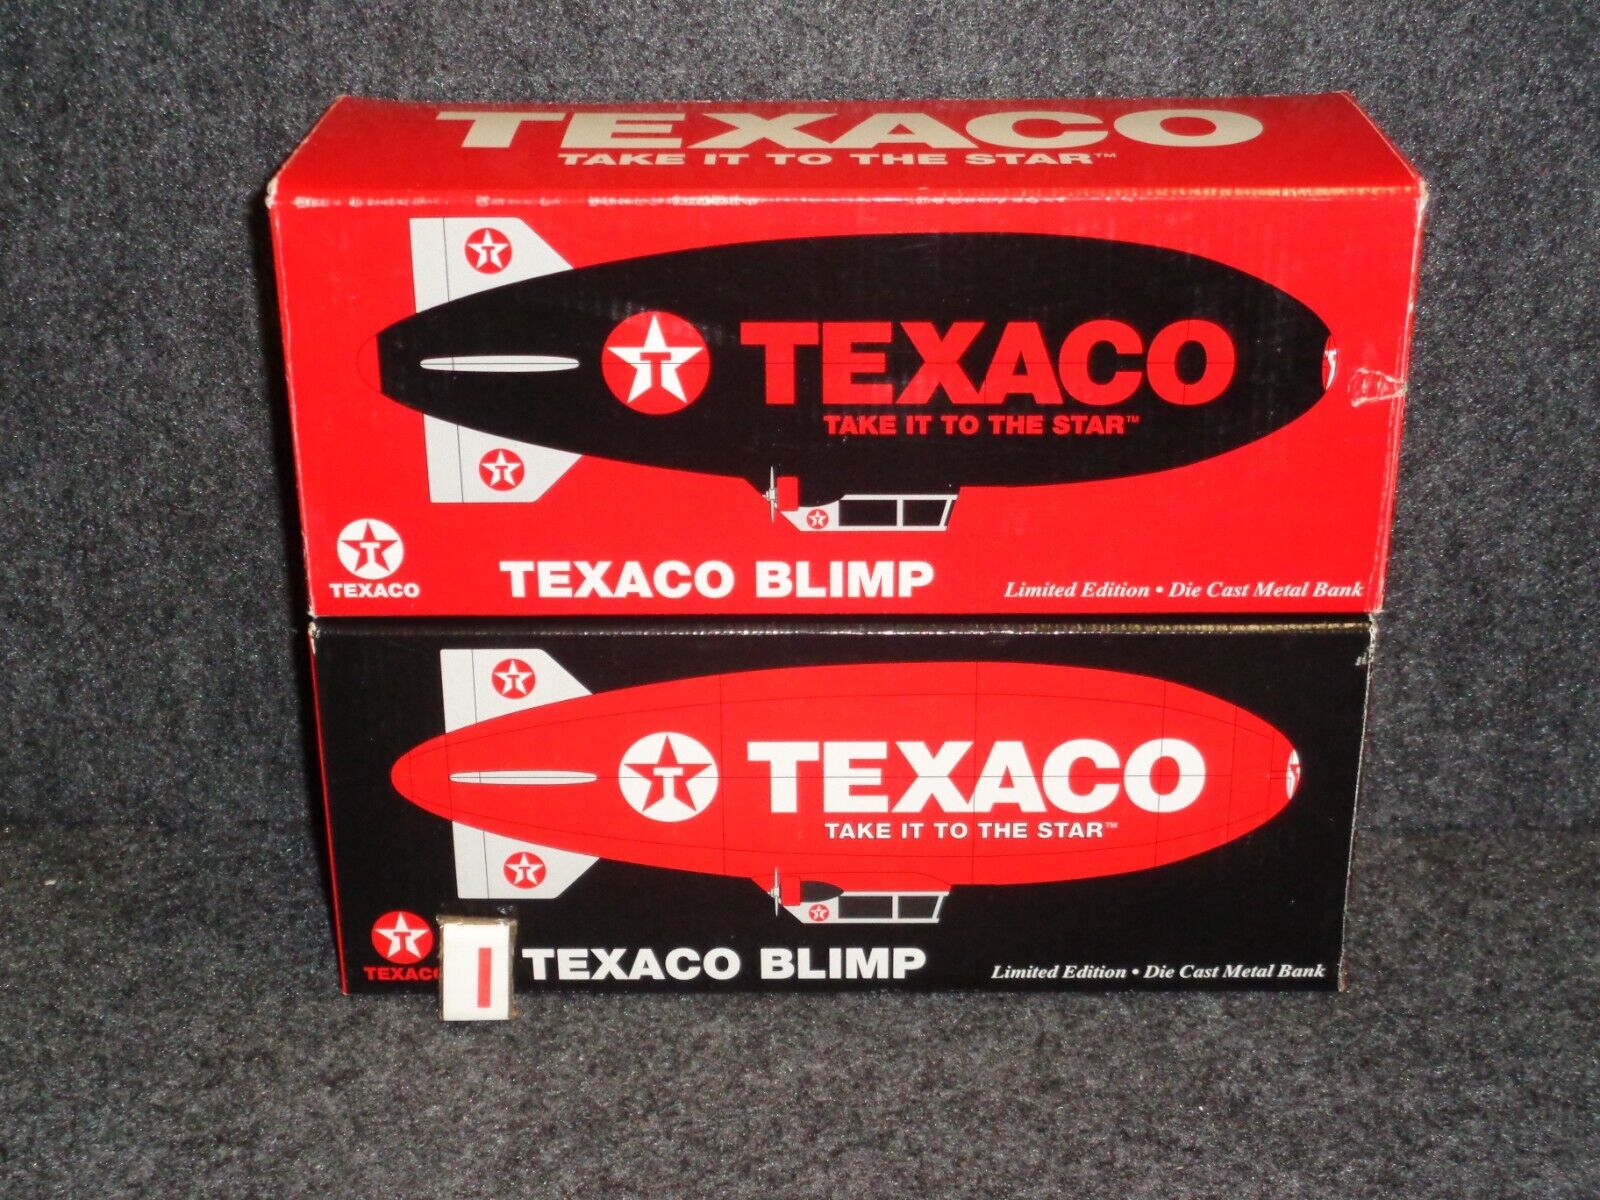 TEXACO BLIMP SET Diecast Coin Bank's Red & Black SpecCast AIRSHIP Texaco